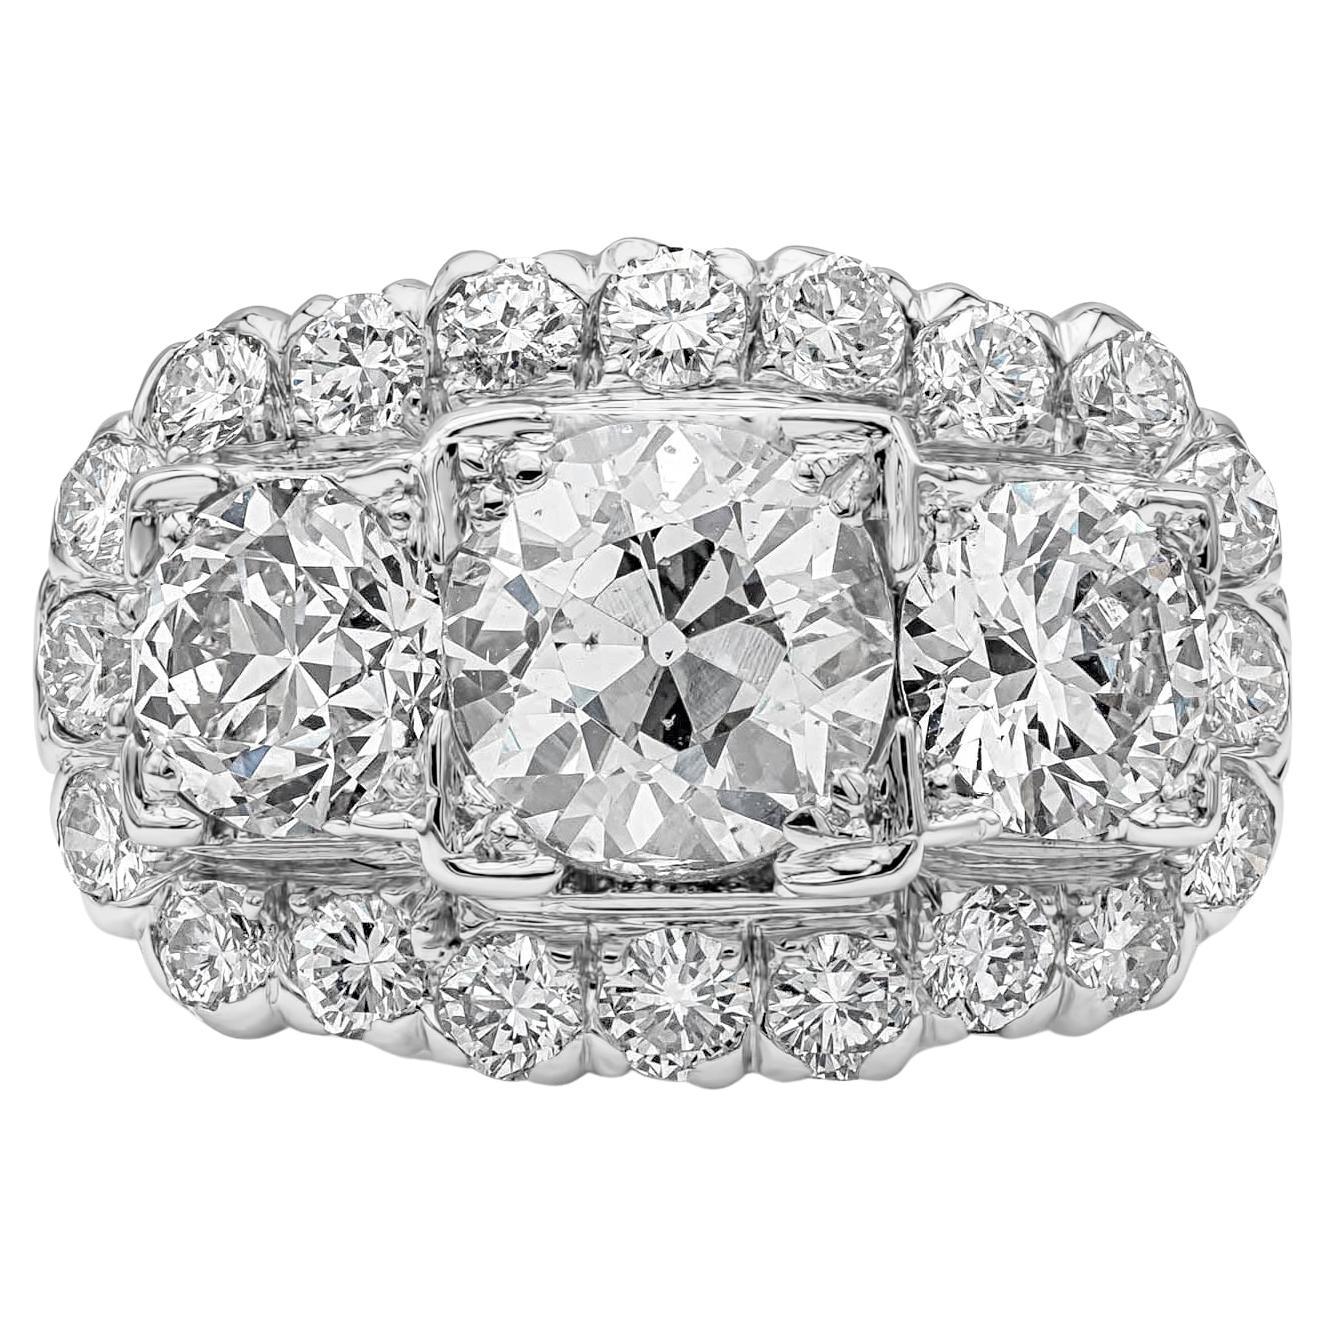 1.64 Carat Total Antique Old European Cut Diamond Engagement Ring  For Sale